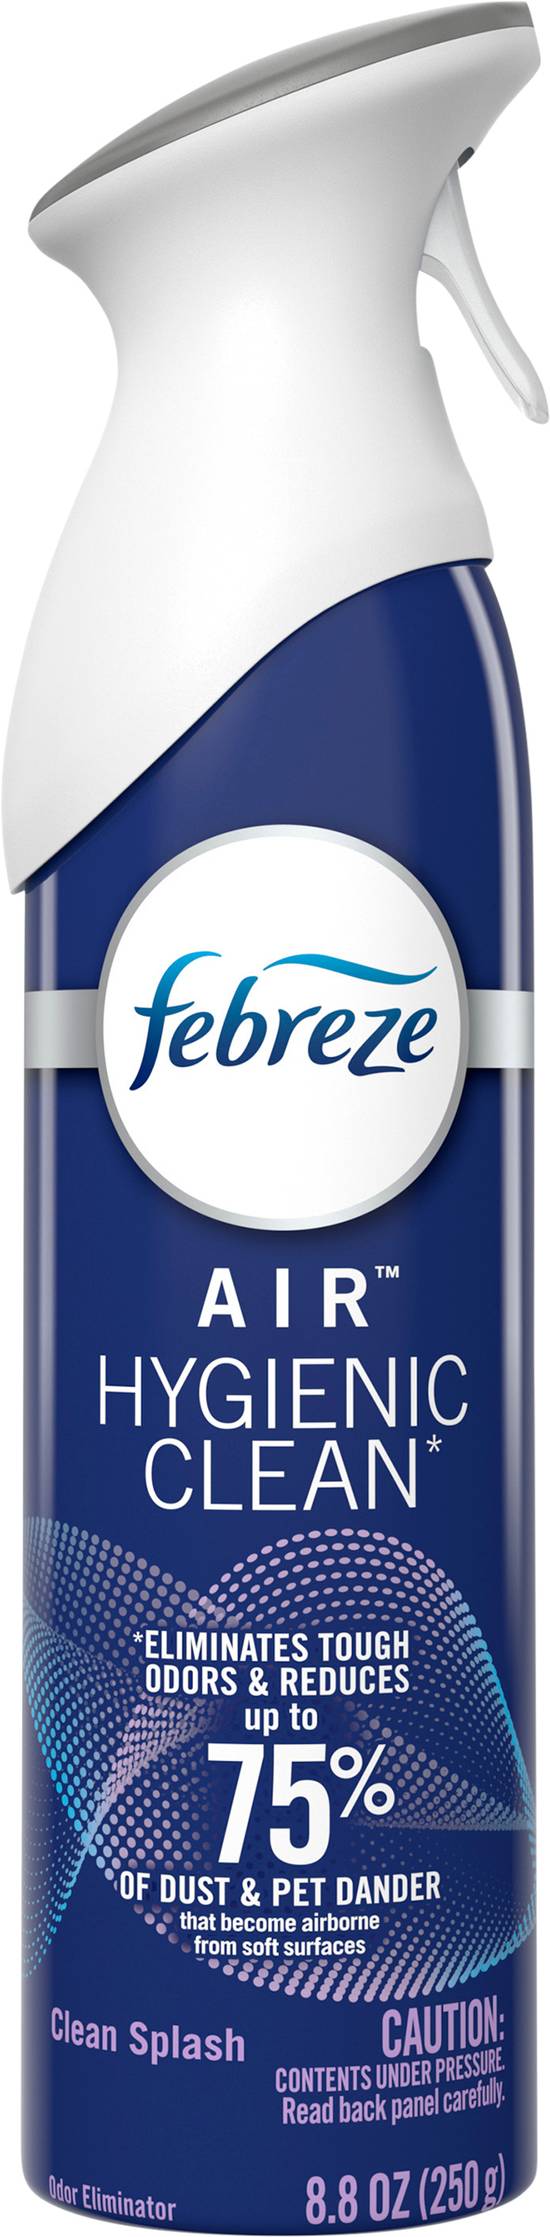 Febreze Air Hygienic Clean Odor-Eliminating Splash Air Freshener